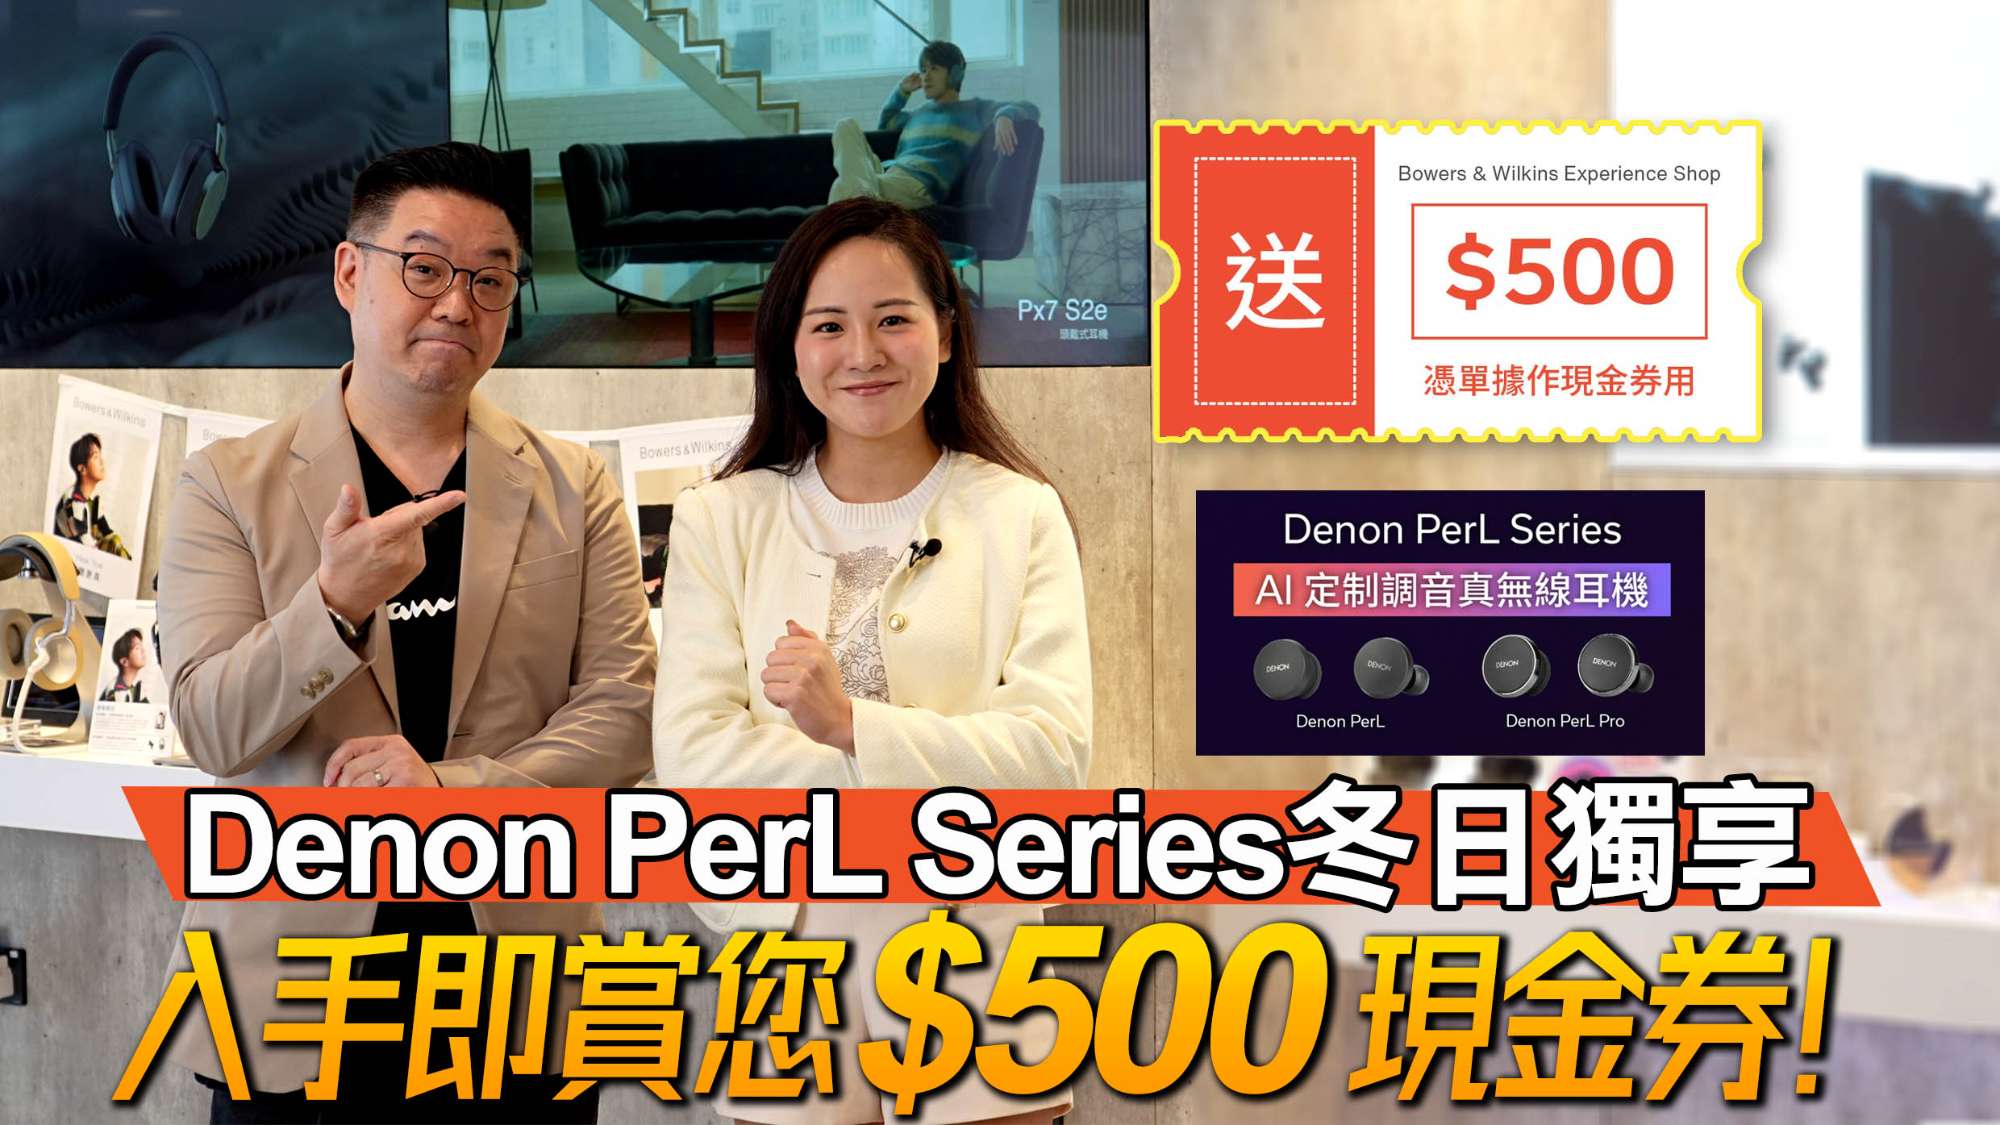 Denon Perl Promotion forum copy.jpg